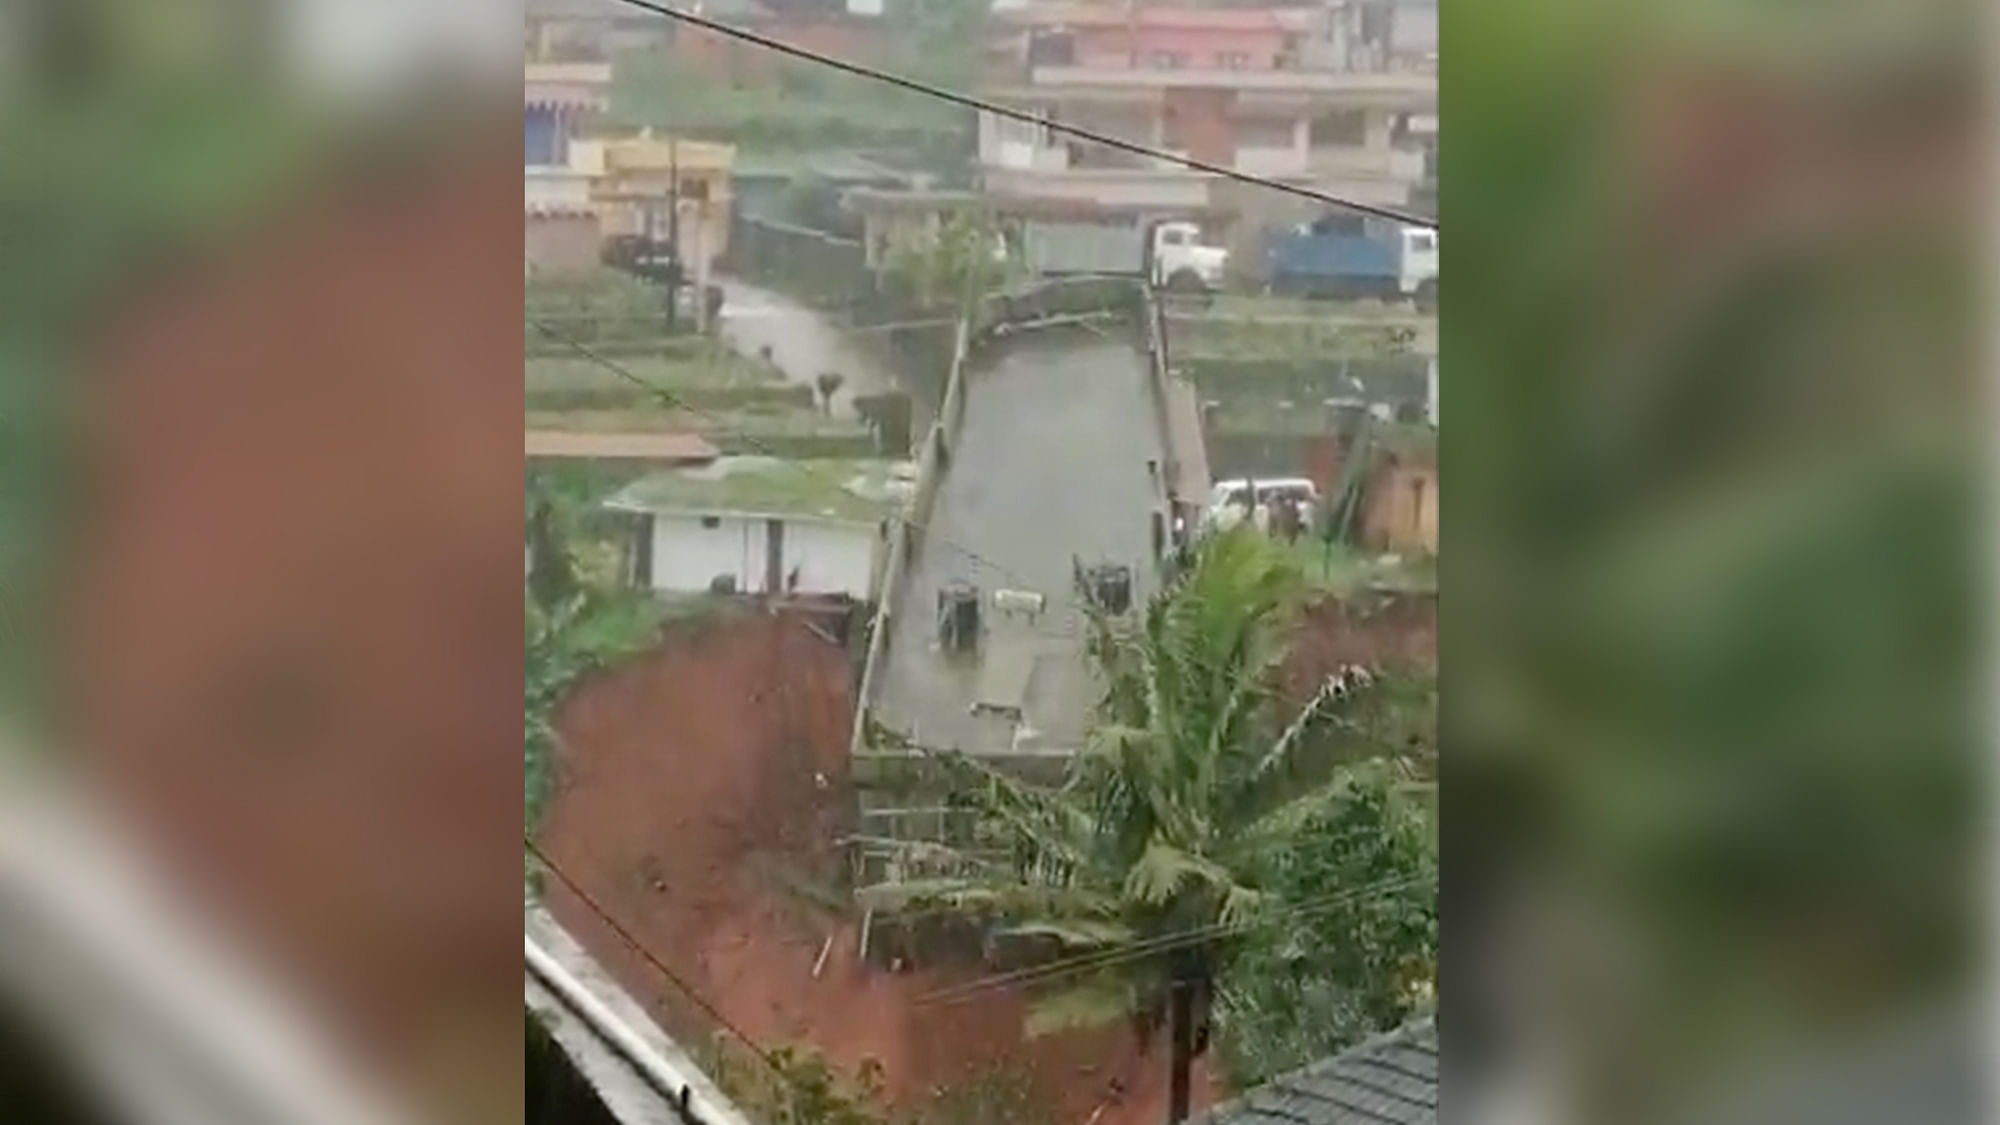 House crumbles down after landslide in Coorg district of Karnataka